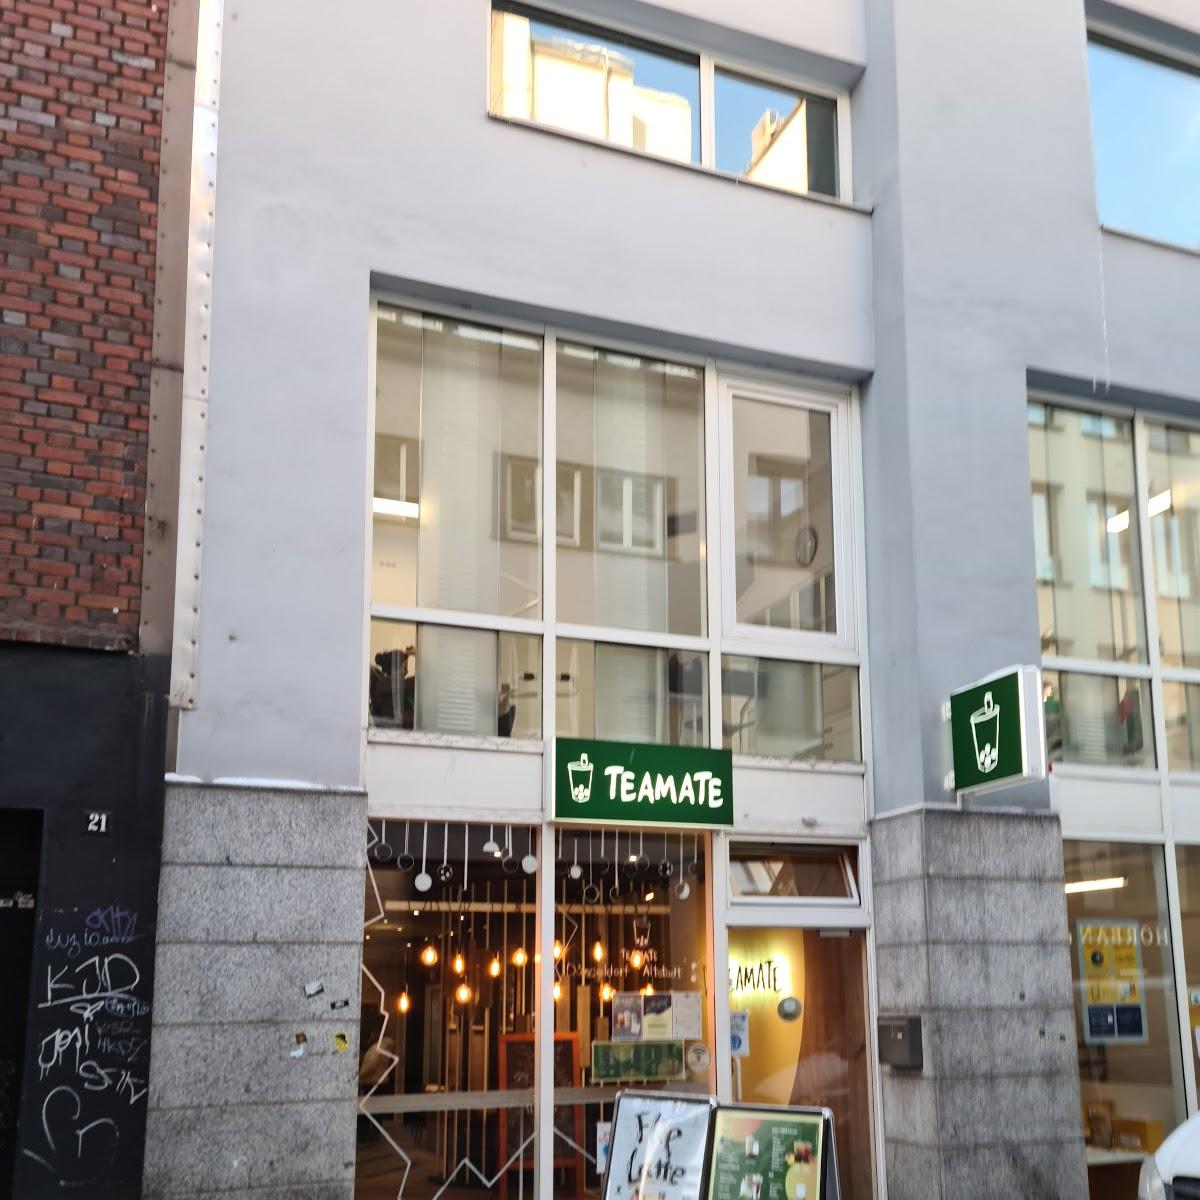 Restaurant "Teamate" in Düsseldorf